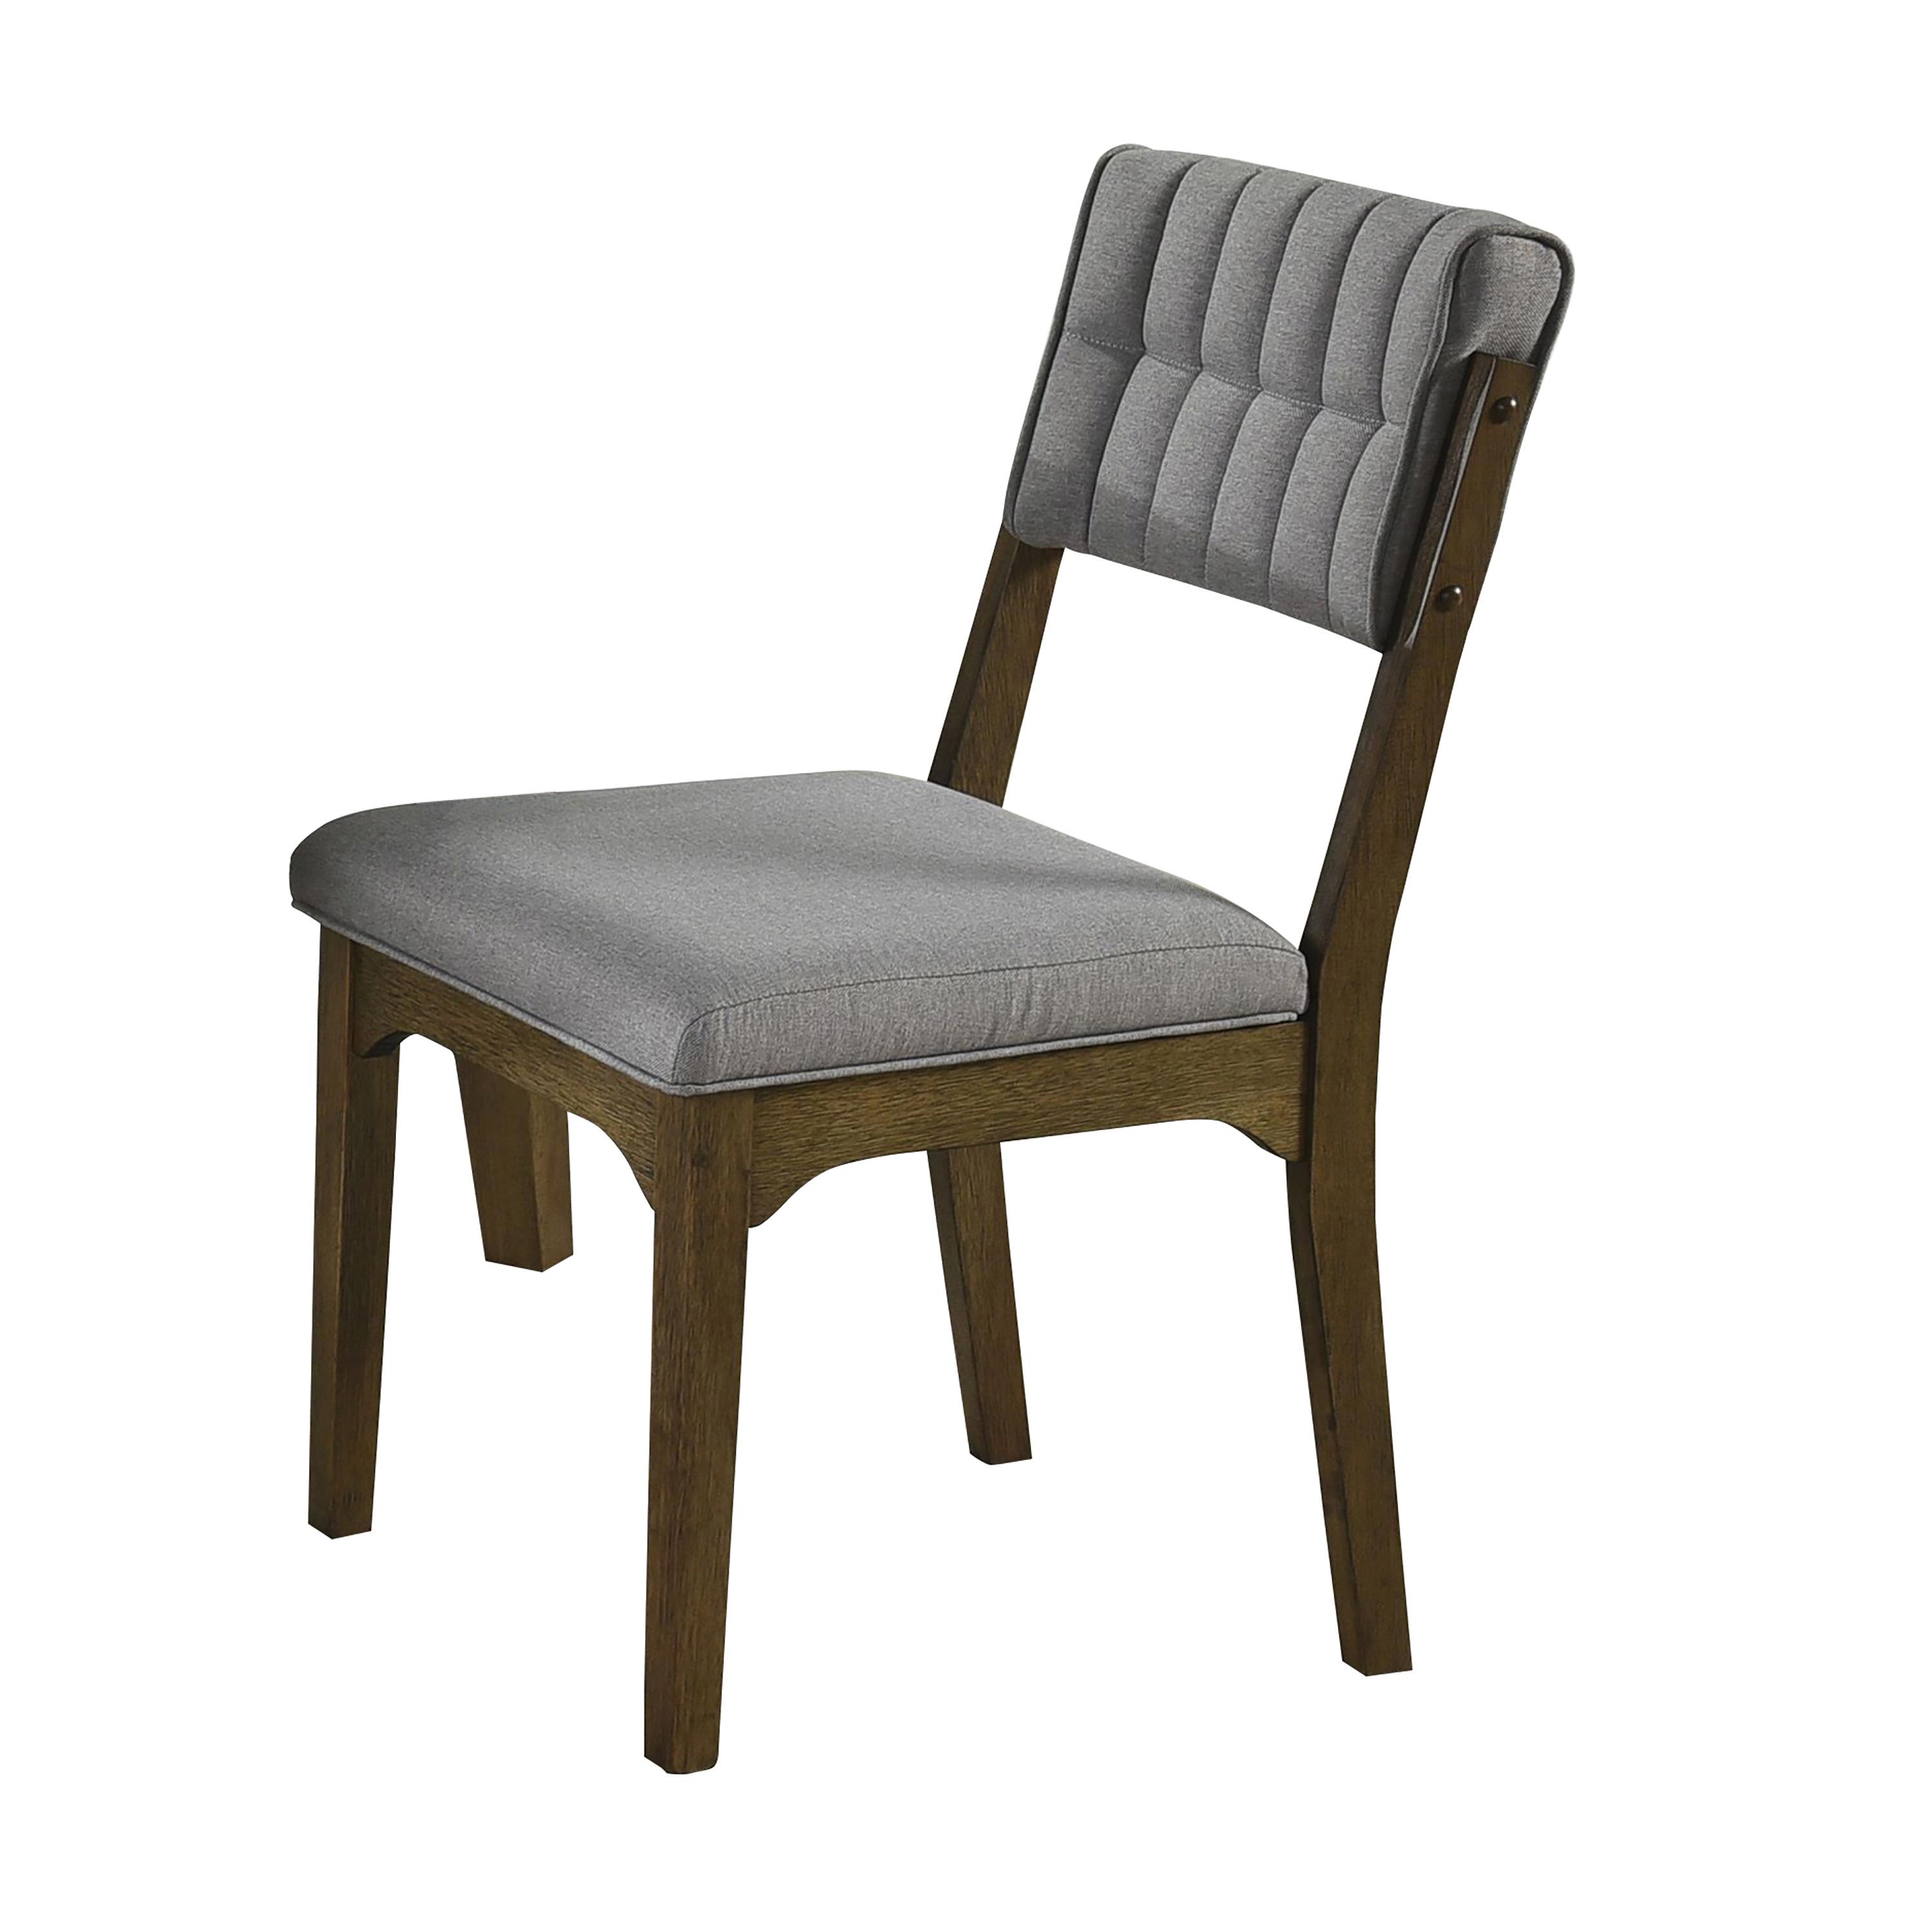 Transitional Side Chair Set 110732 Rayleene 110732 in Medium Brown Fabric